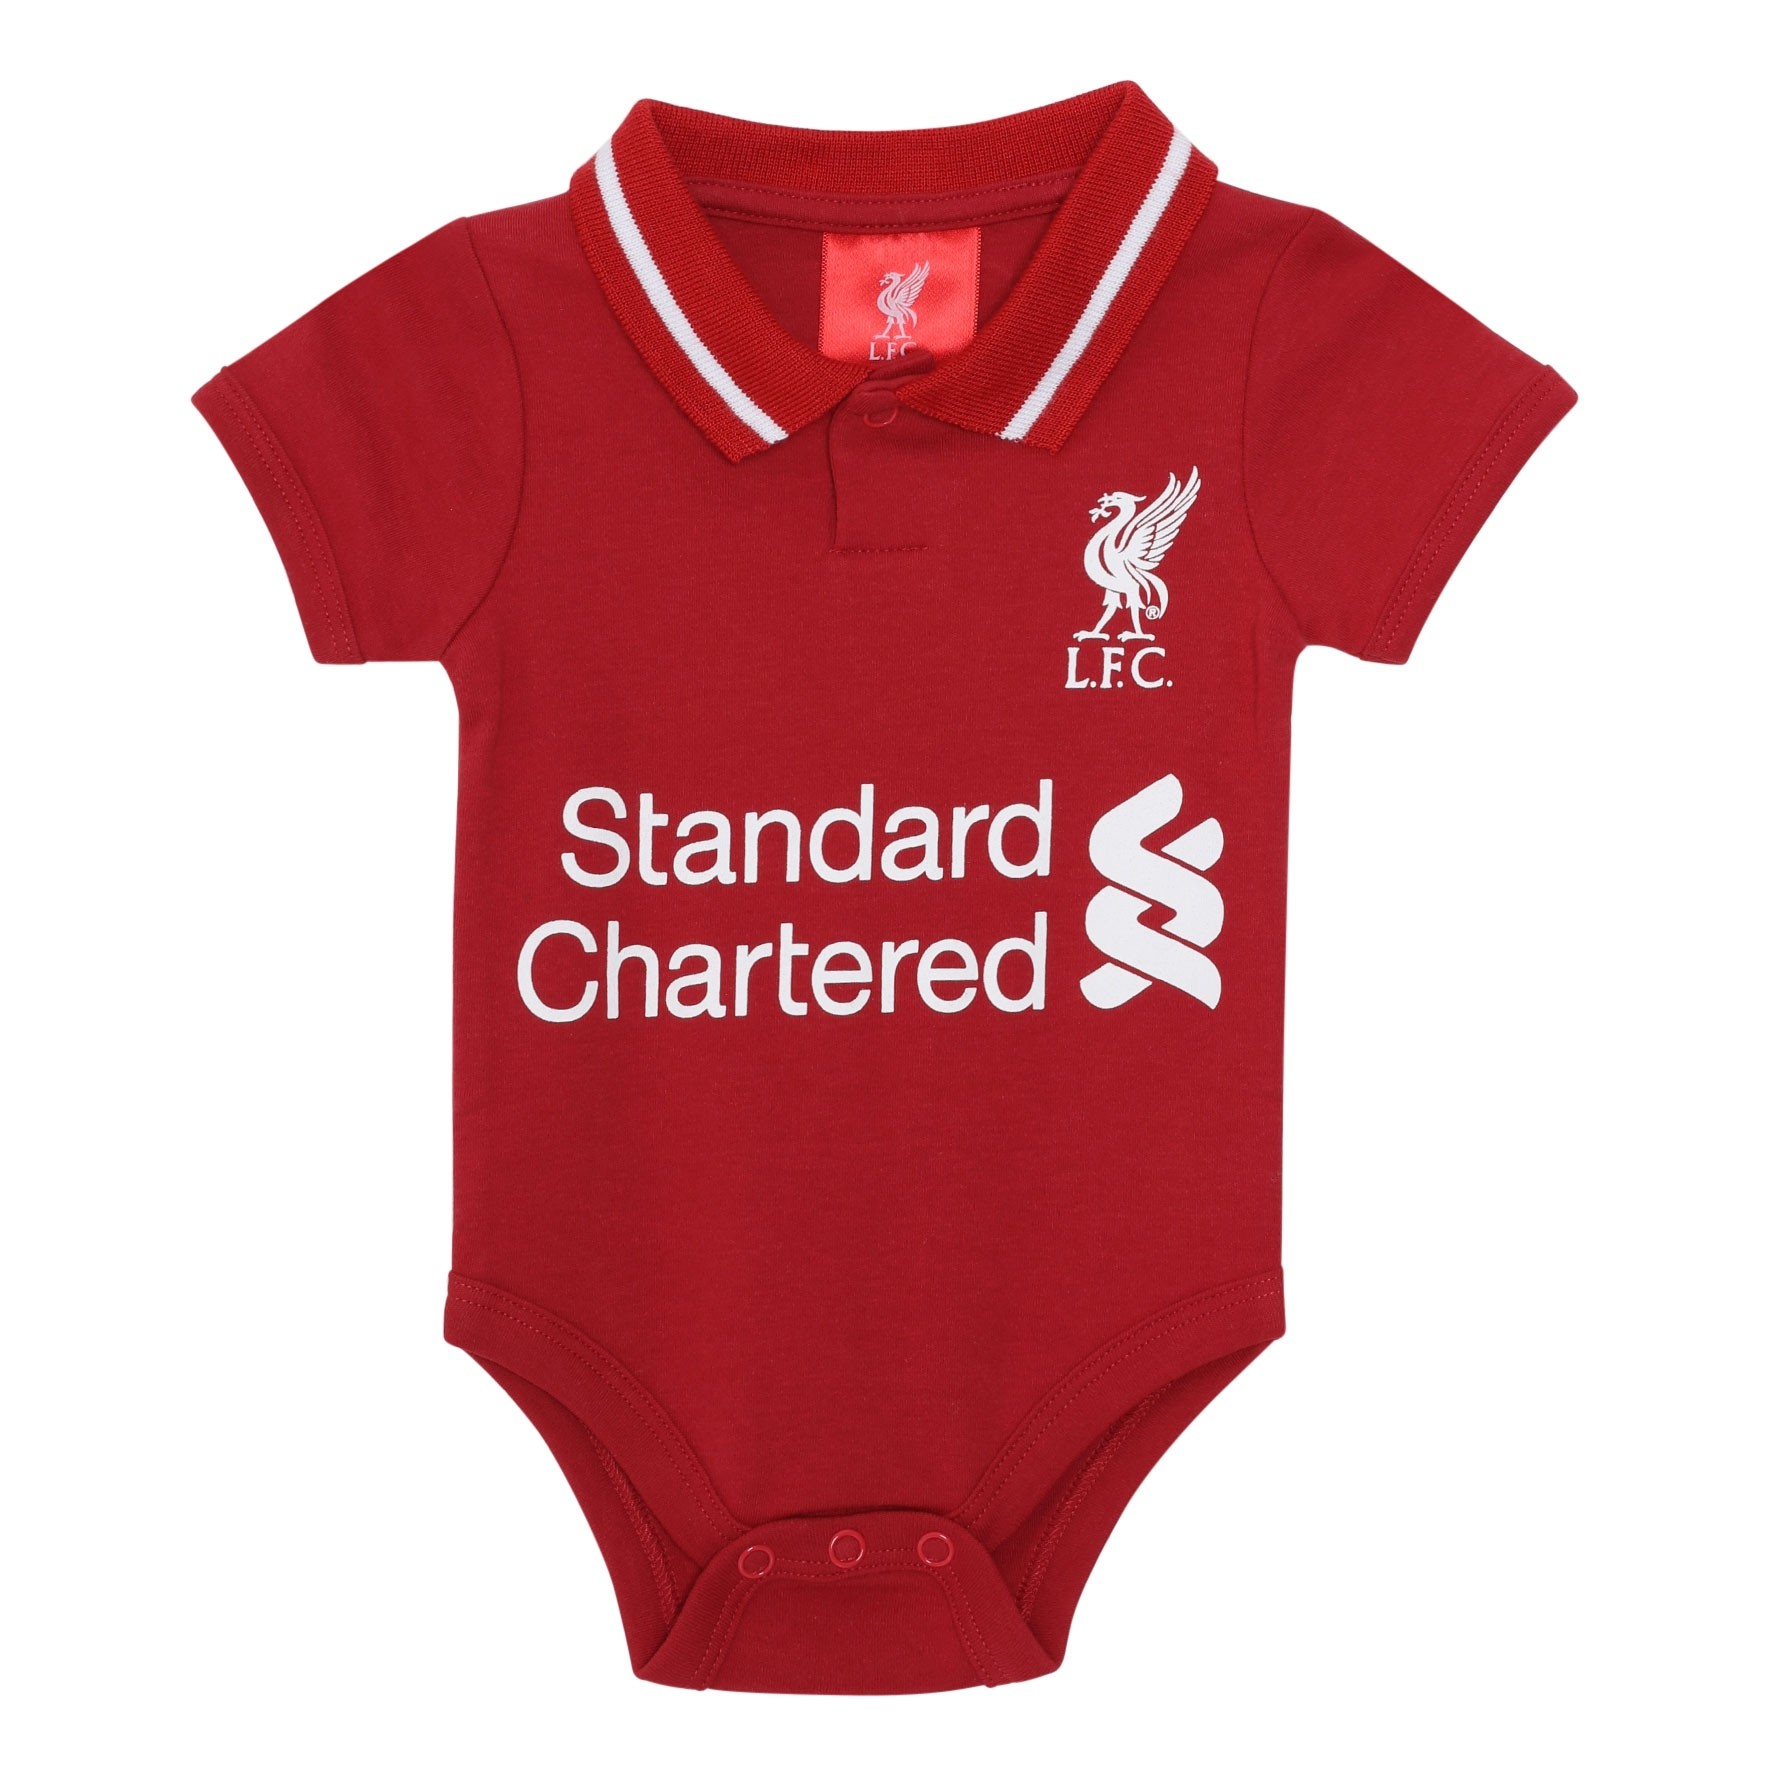 LFC Baby 18/19 Home Kit Body Suit